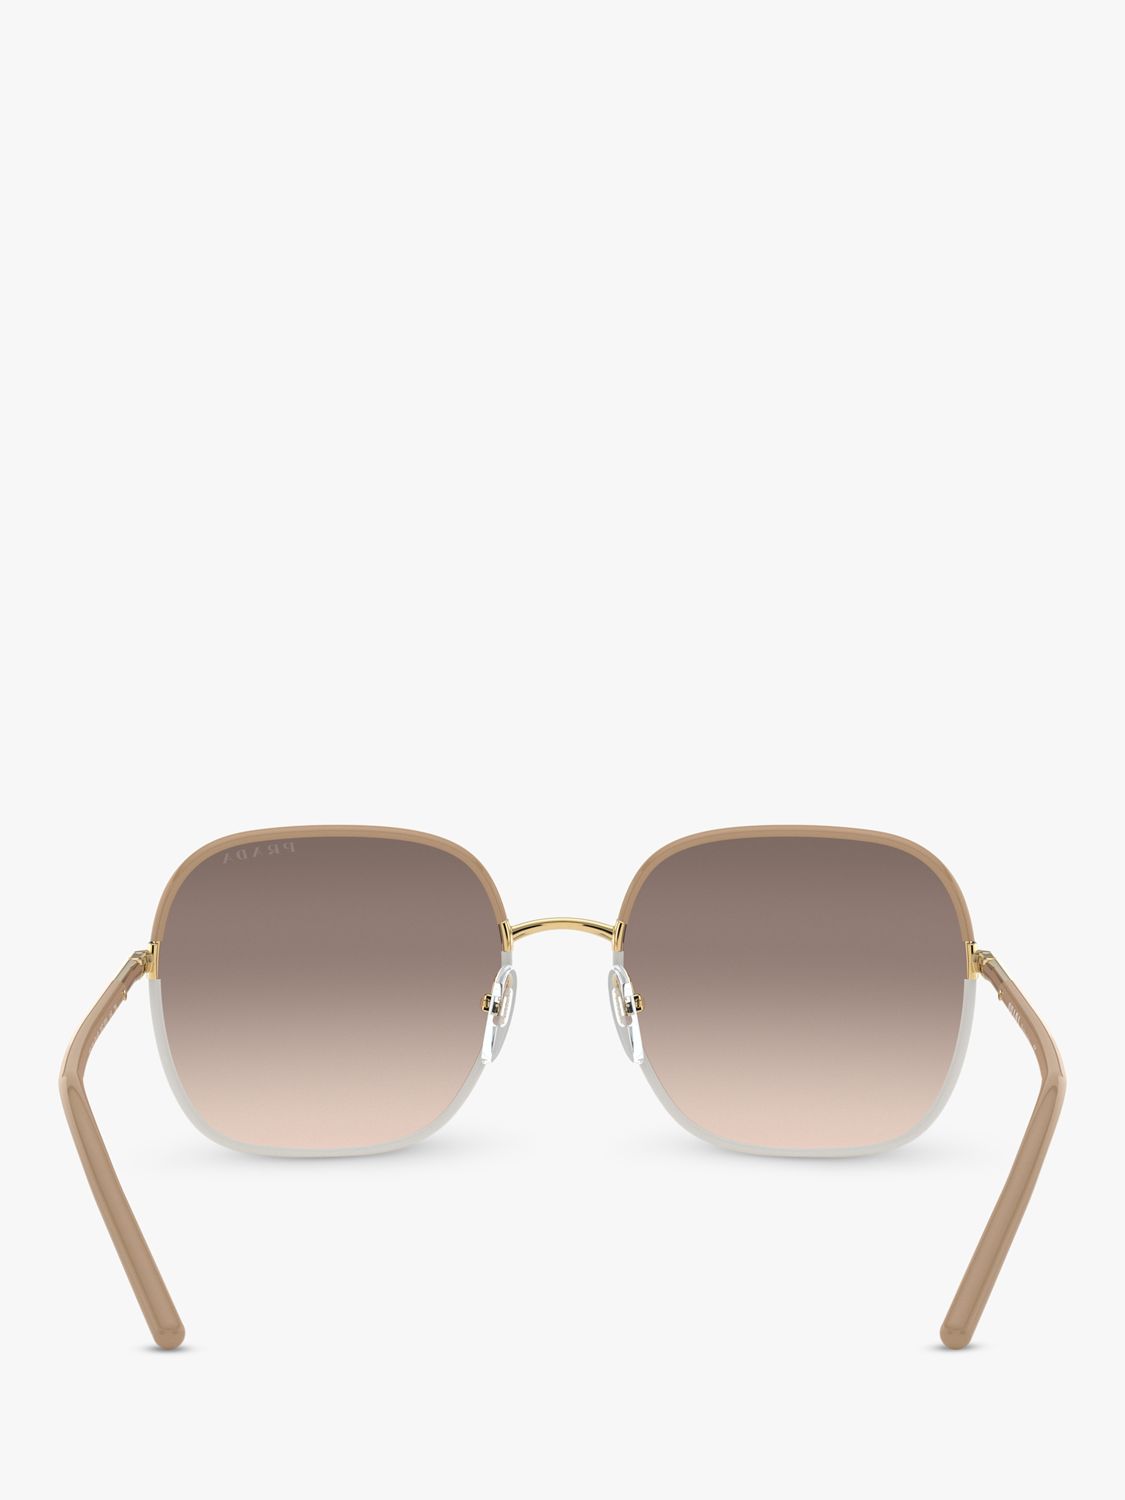 Prada PR 67XS Women's Square Sunglasses, Gold/Beige/Light Brown